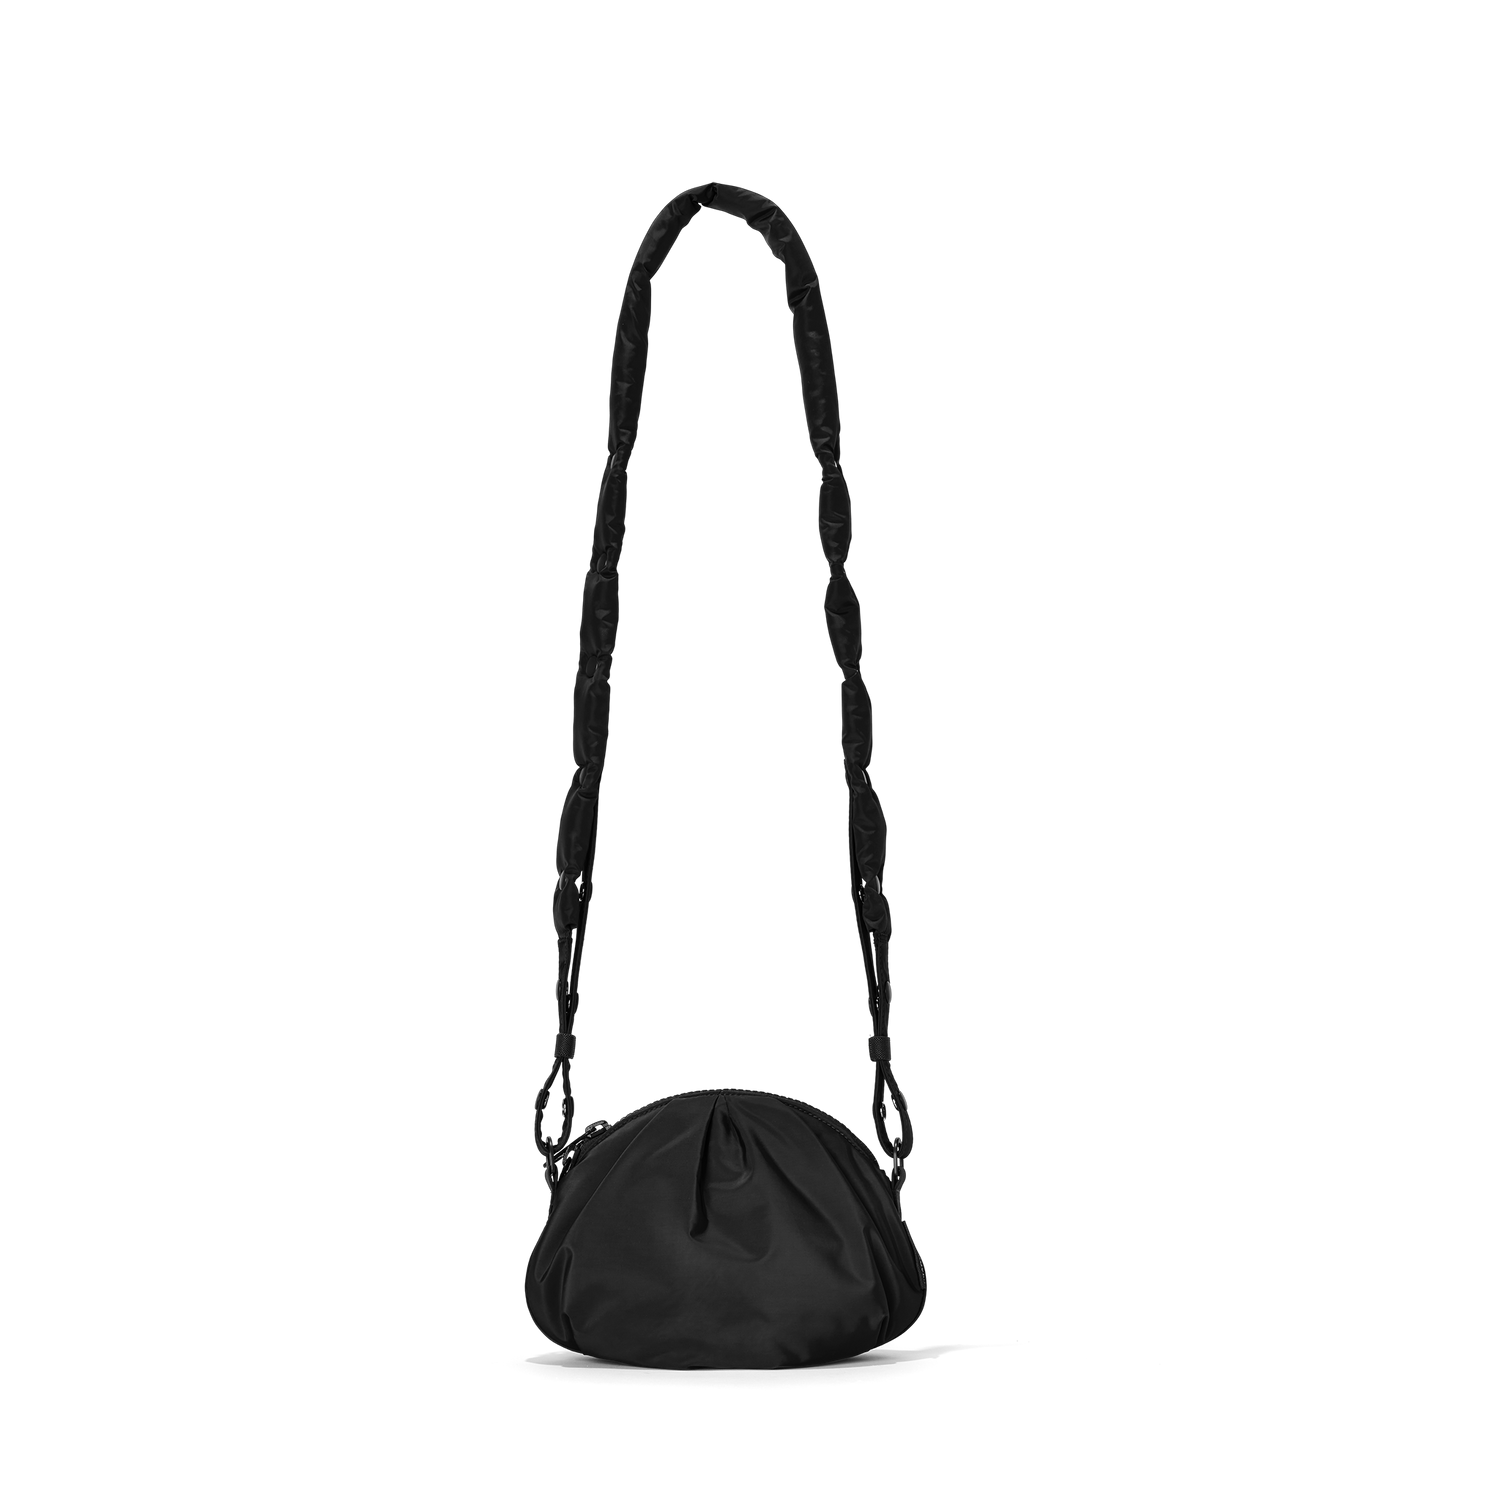 Mini Cross Body Bag by The Daily Edited Black